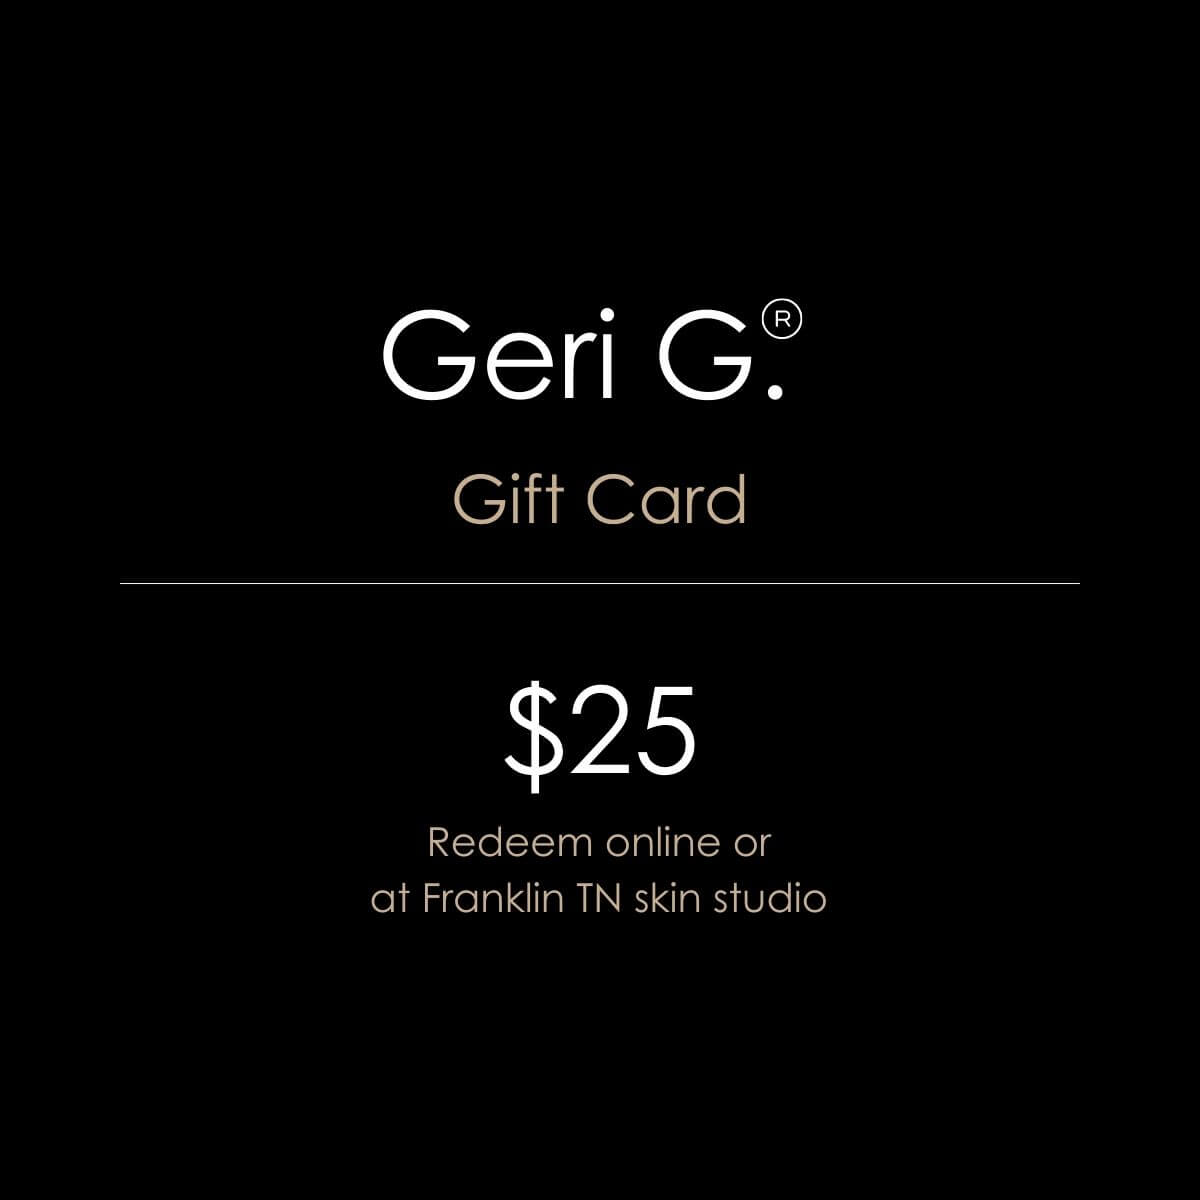 Geri G. Beauty $25 GERI G®. Online Gift Card